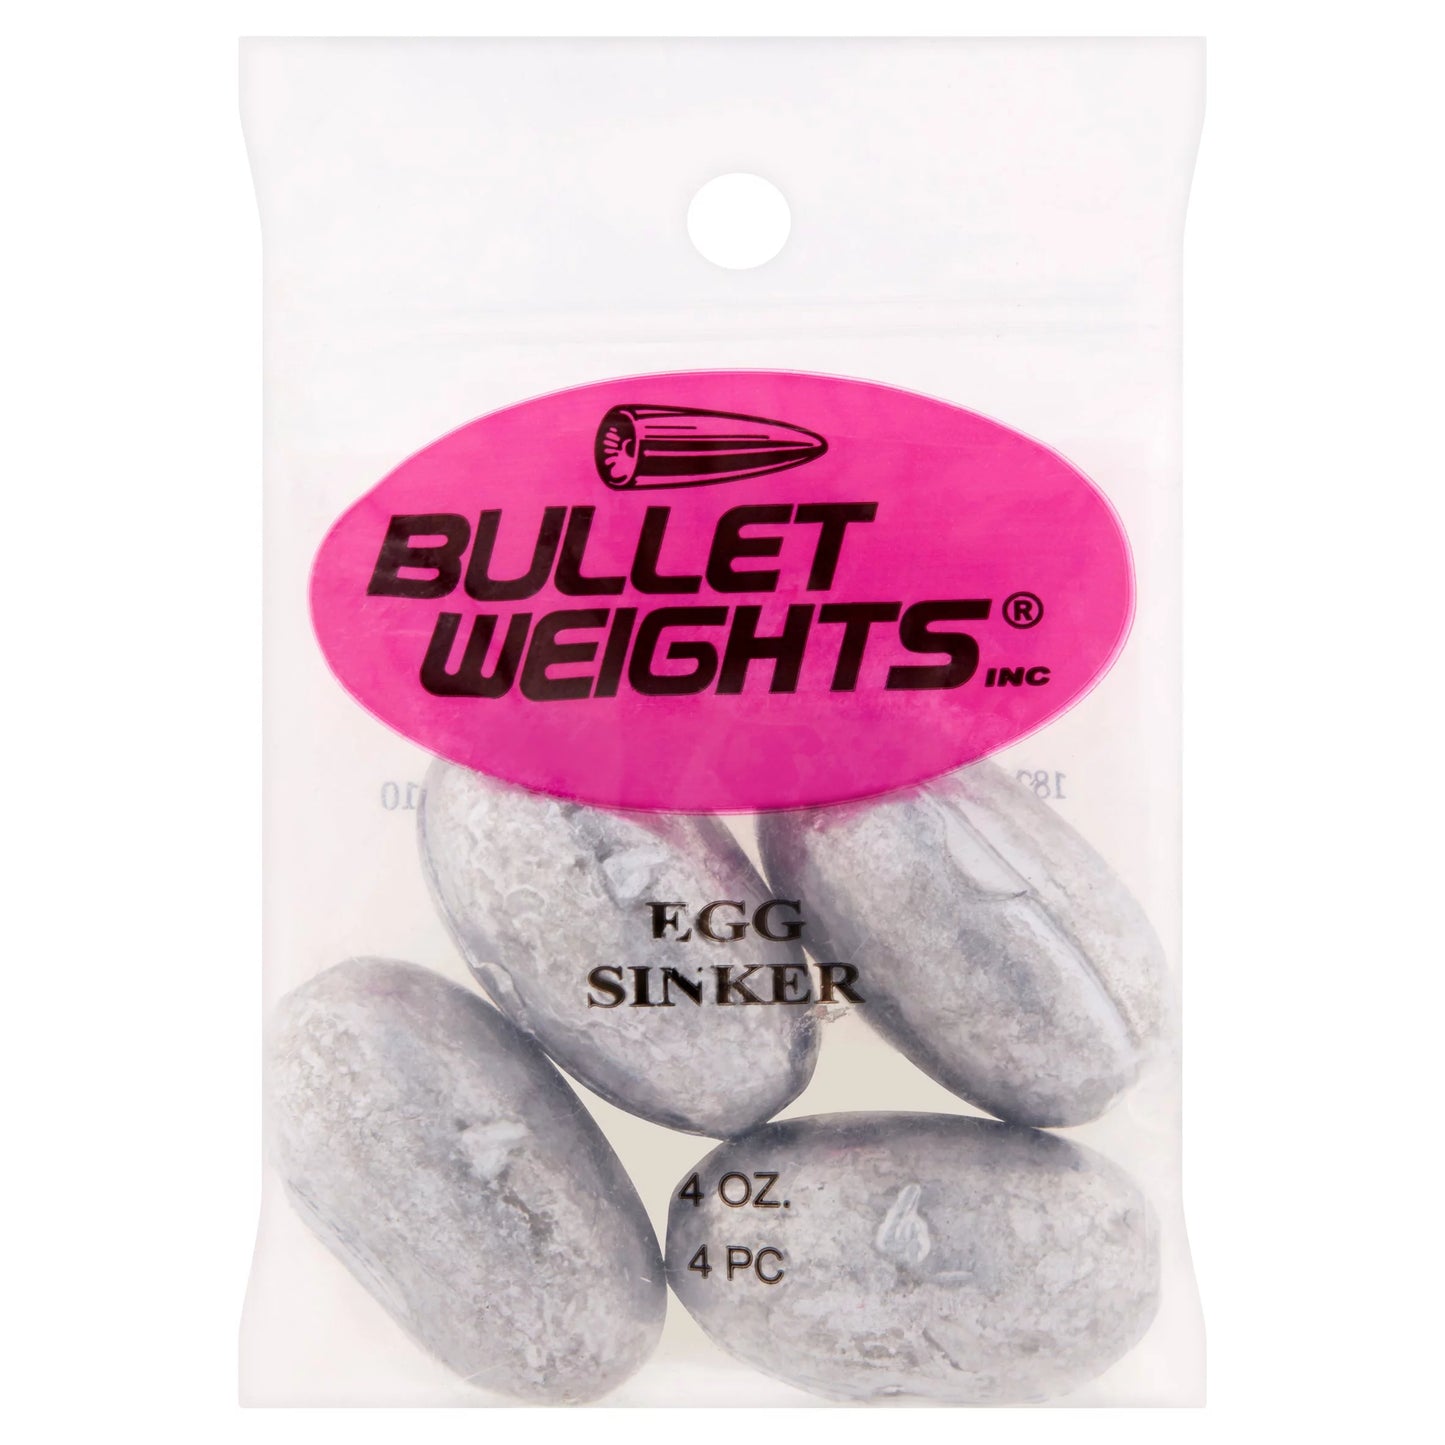 Egg Sinker - Bullet Weights - Egg Sinker 4oz 4pc